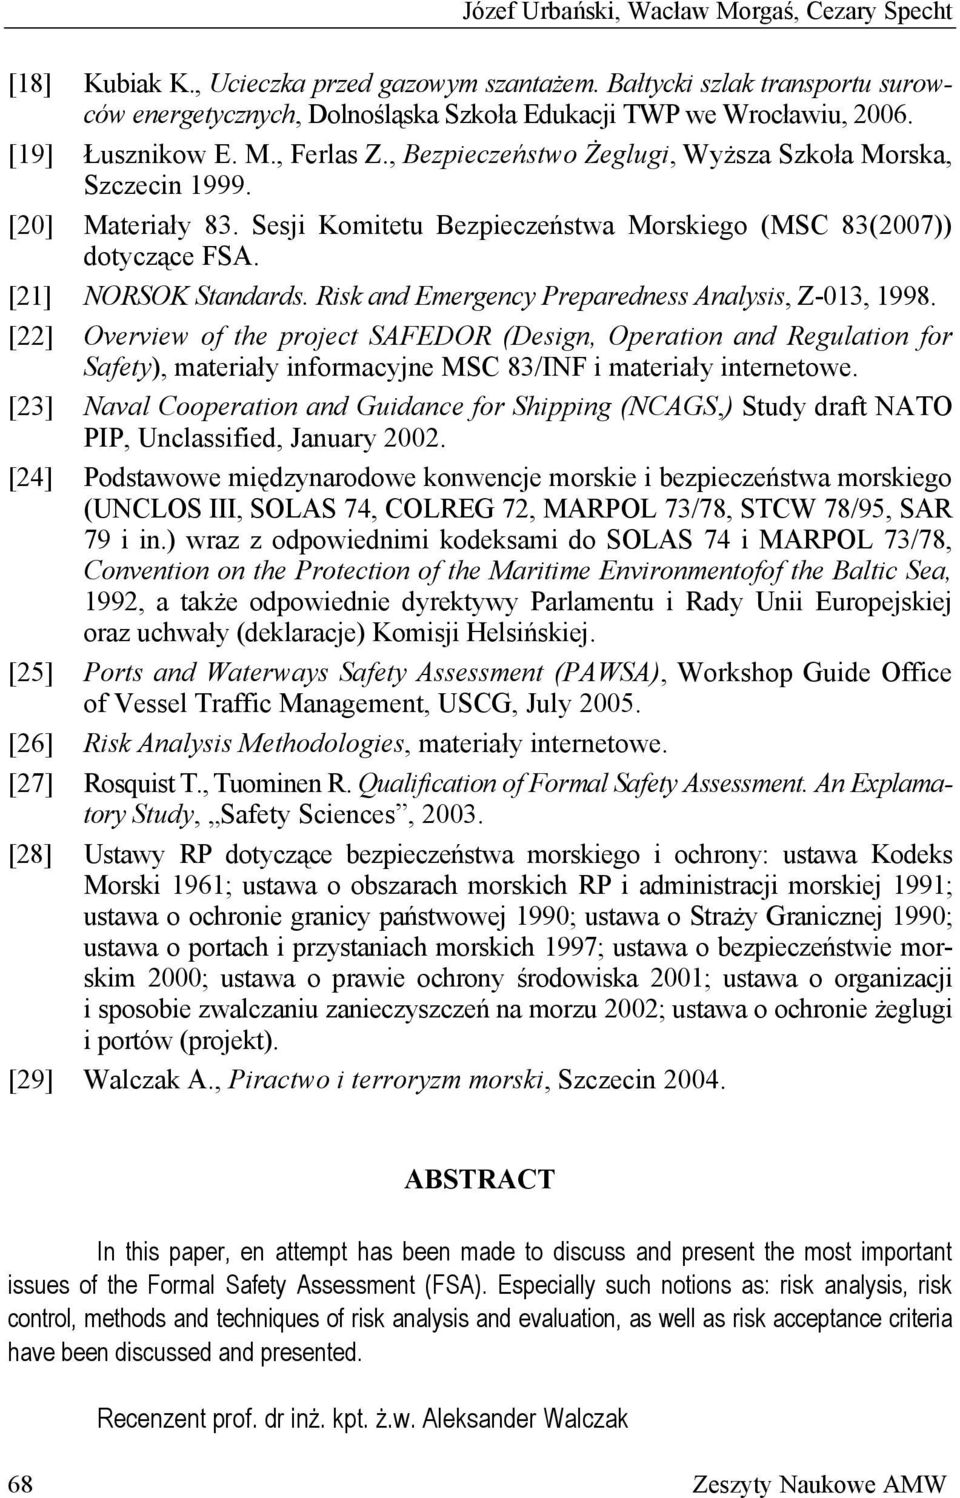 [21] NORSOK Standards. Risk and Emergency Preparedness Analysis, Z-013, 1998.